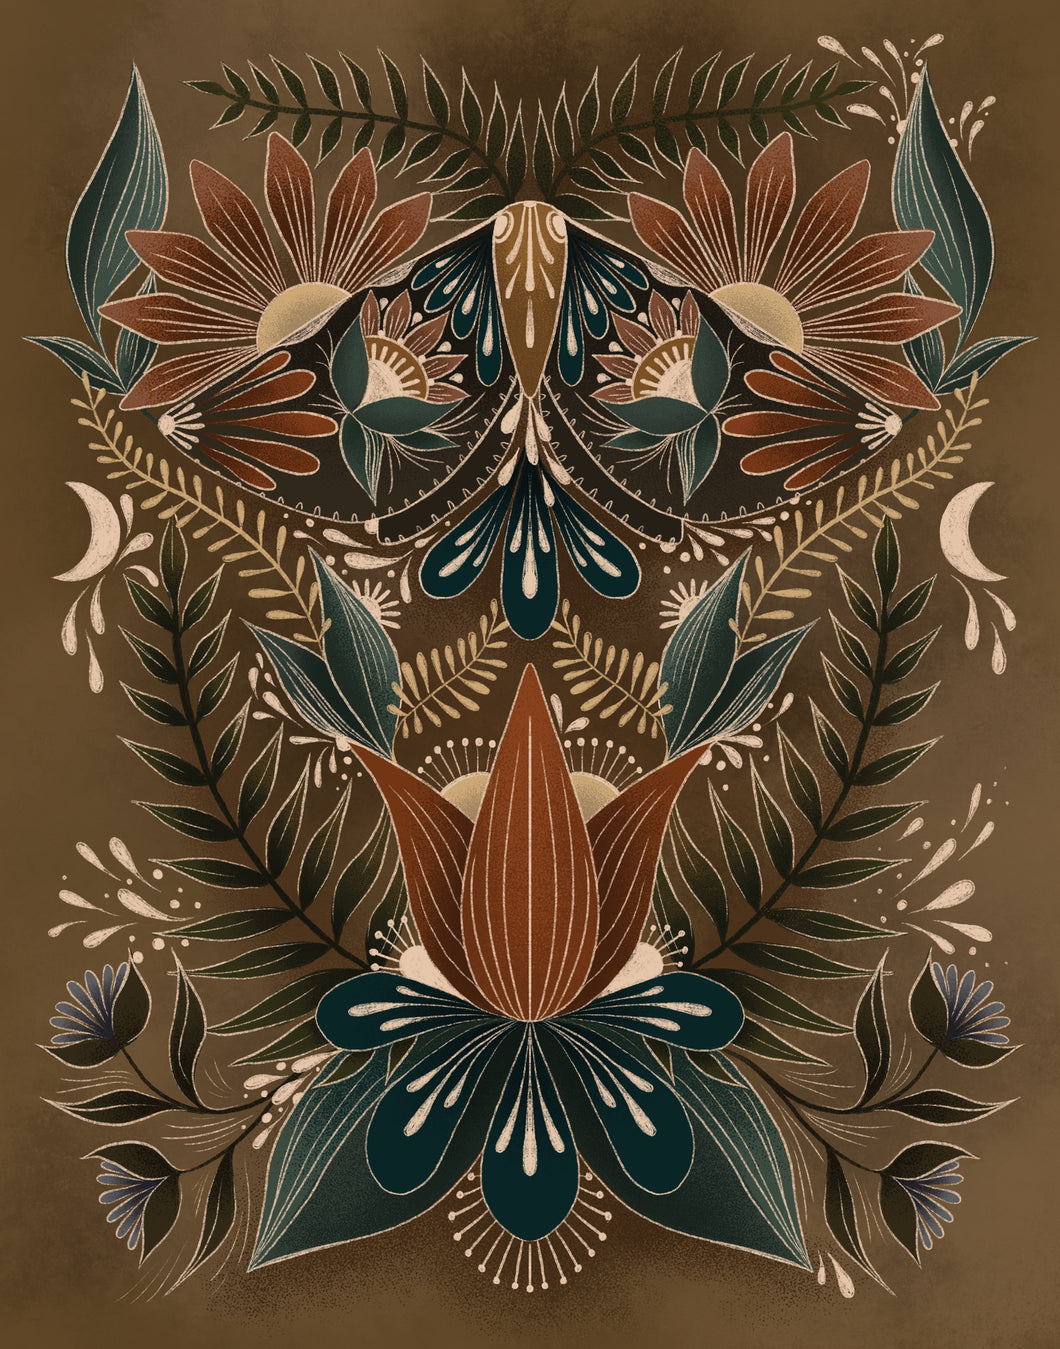 Boho Folk Art Moth Print (5x7, 8x10, or 11x14) – These Old Woods